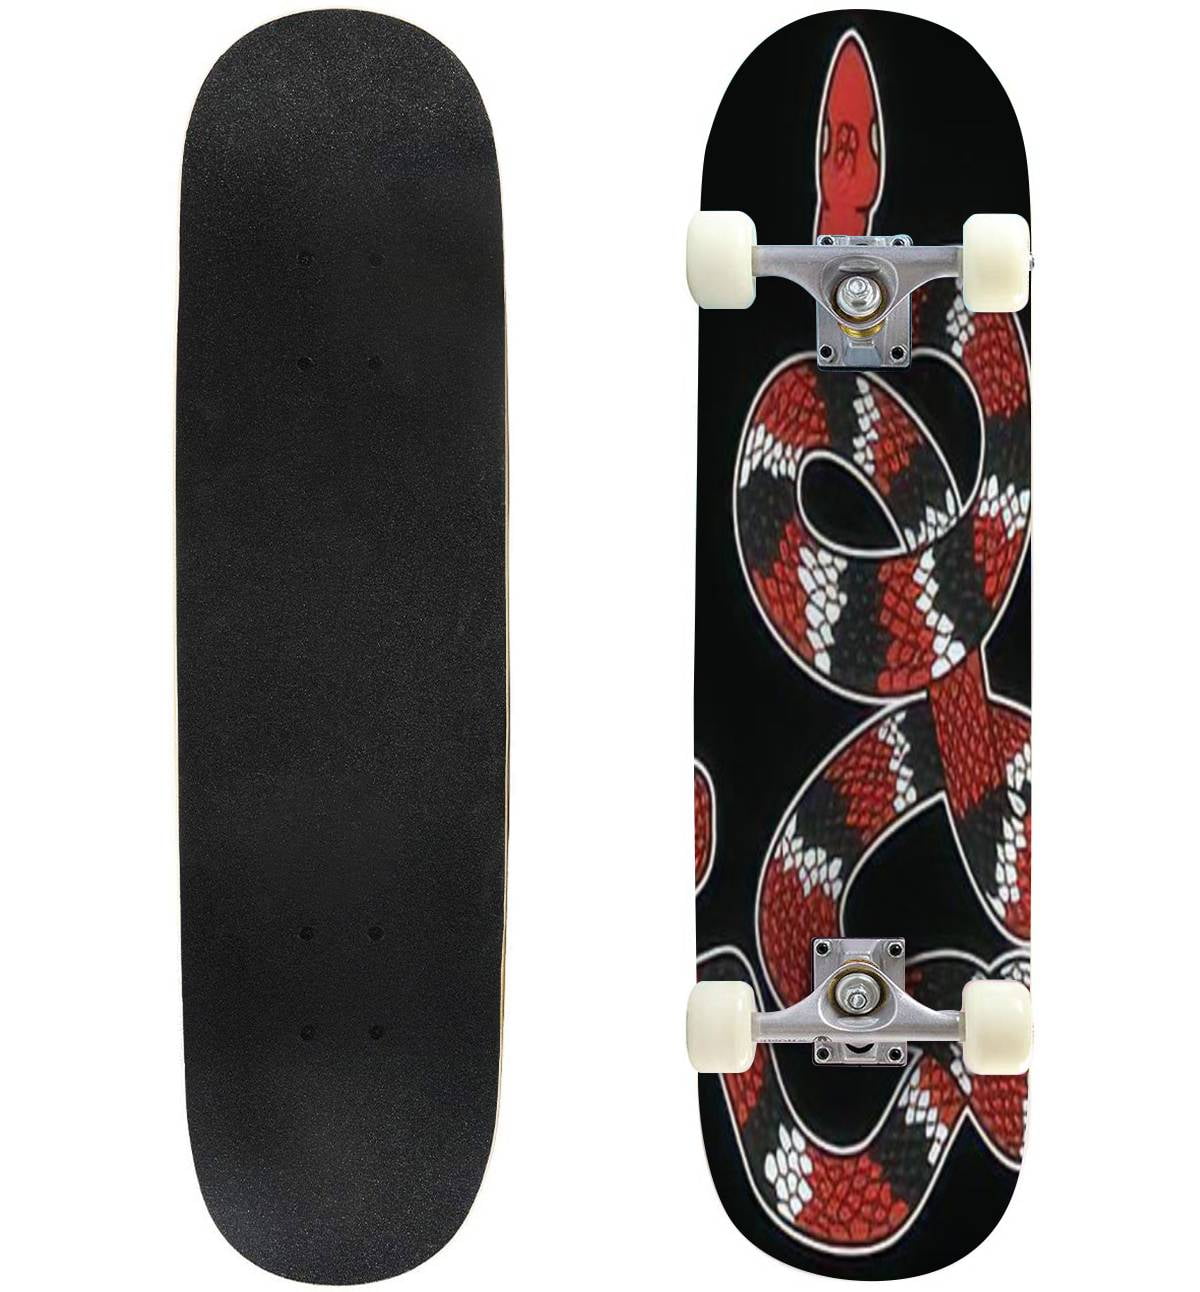 japanese style skull snake in the roses Outdoor Skateboard Longboards 31"x8" Pro Complete Skate Board Cruiser - Walmart.com